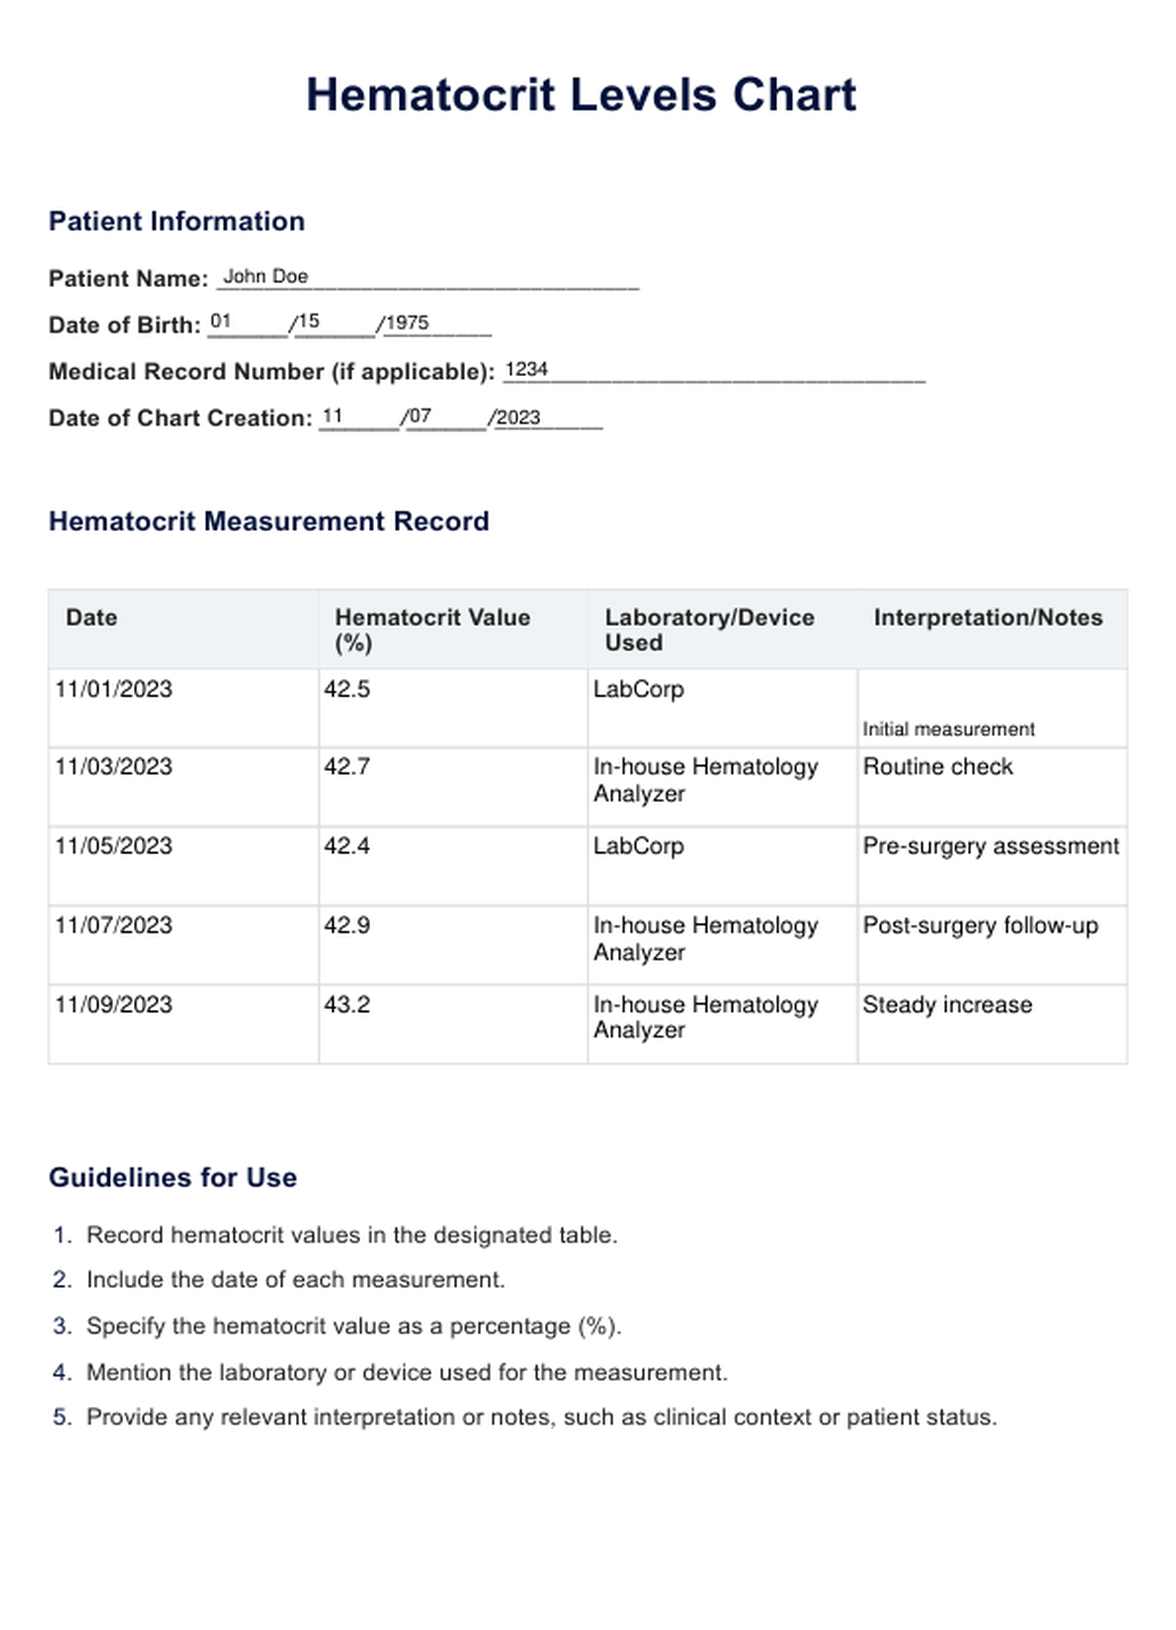 Hematocrit Levels PDF Example